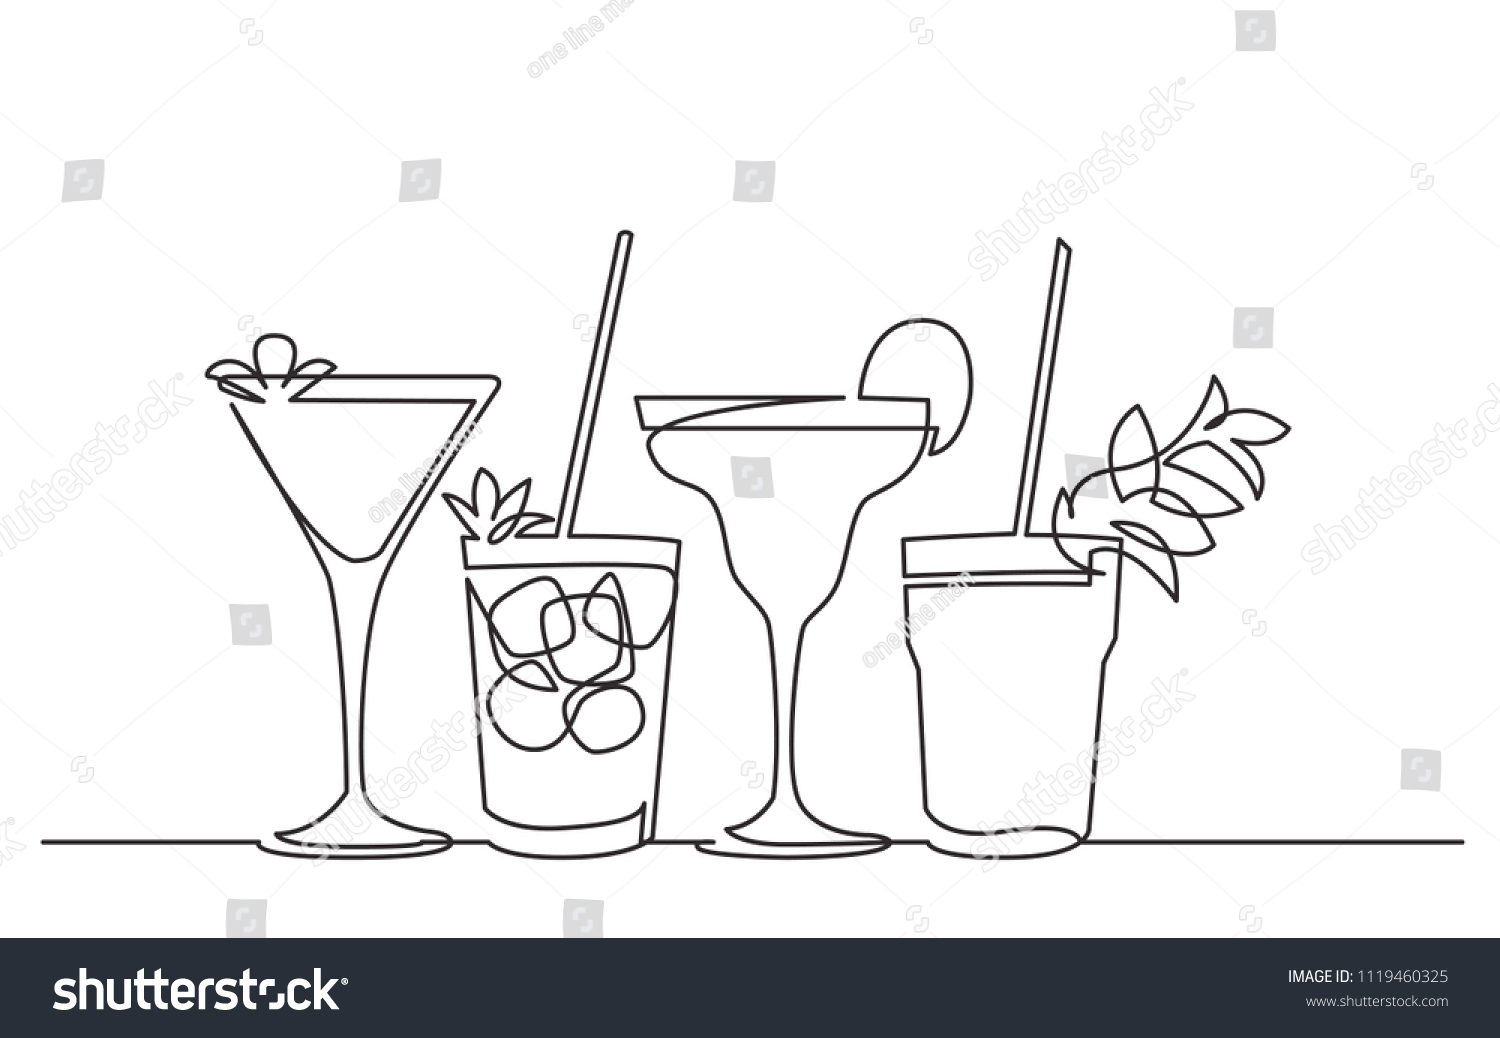 Beverage drinking drawing